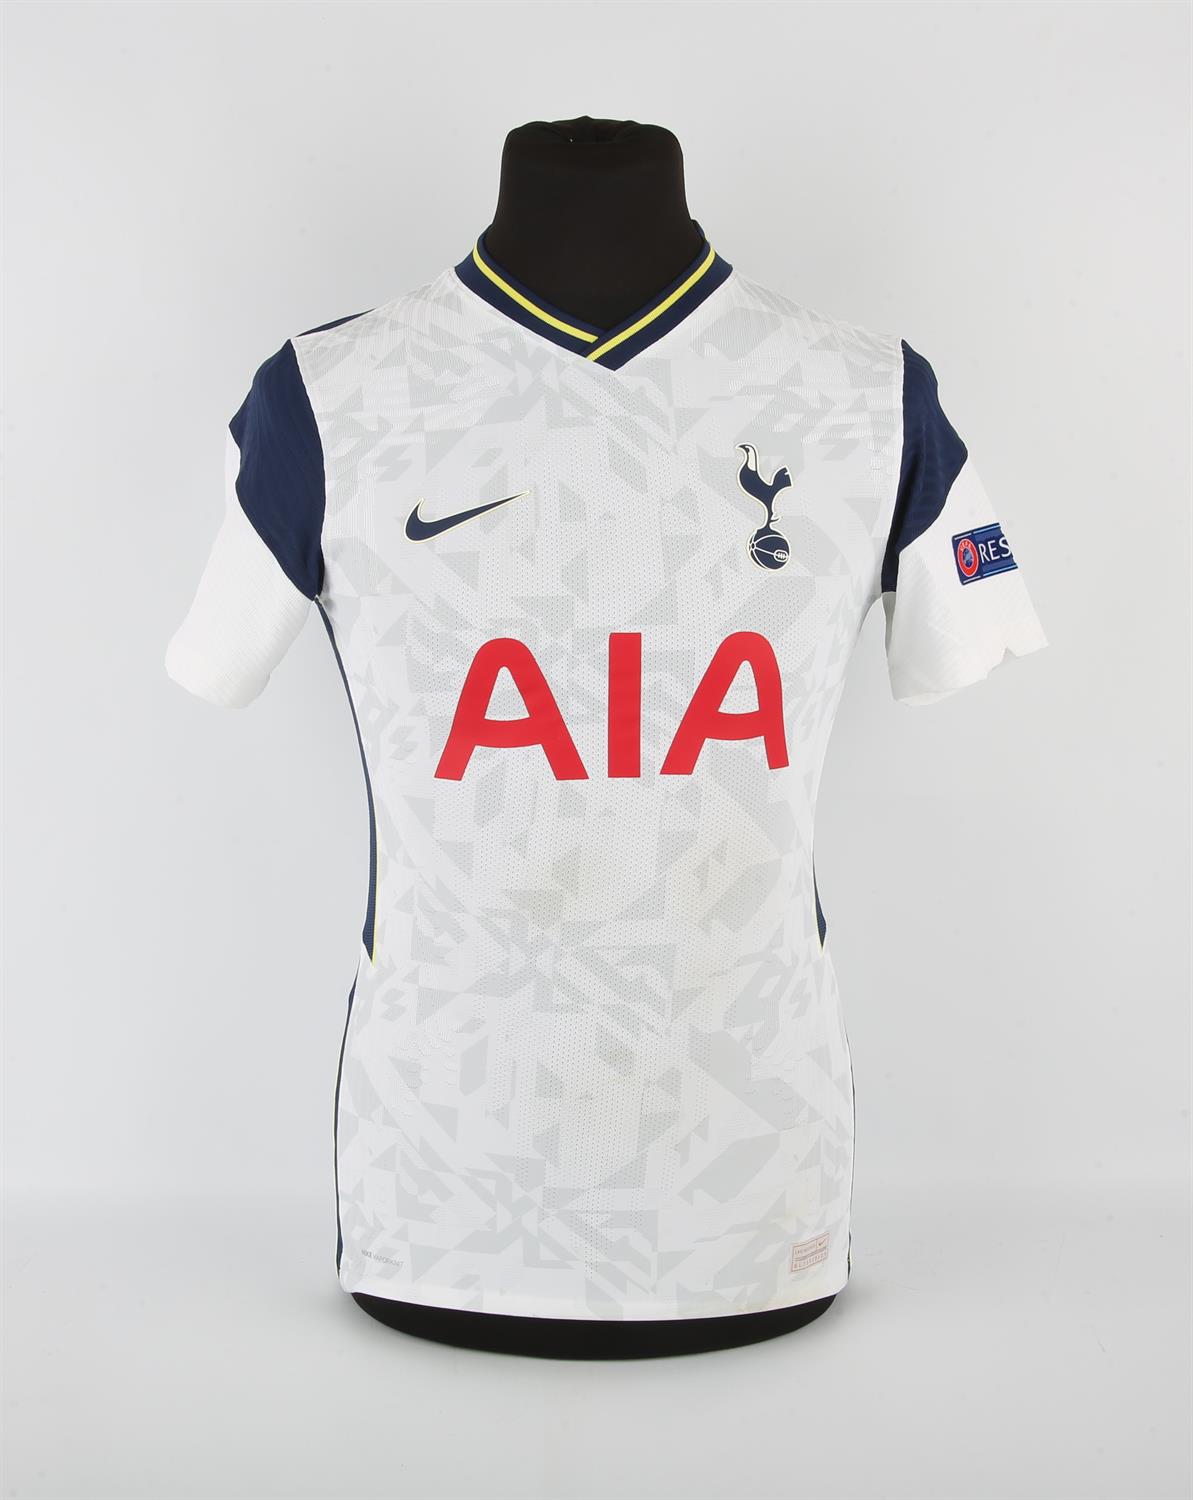 Tottenham Hotspur Football club, Regvilon (No.3) 2020-2021 Europa League kit. Bench worn 11 March - Image 2 of 2